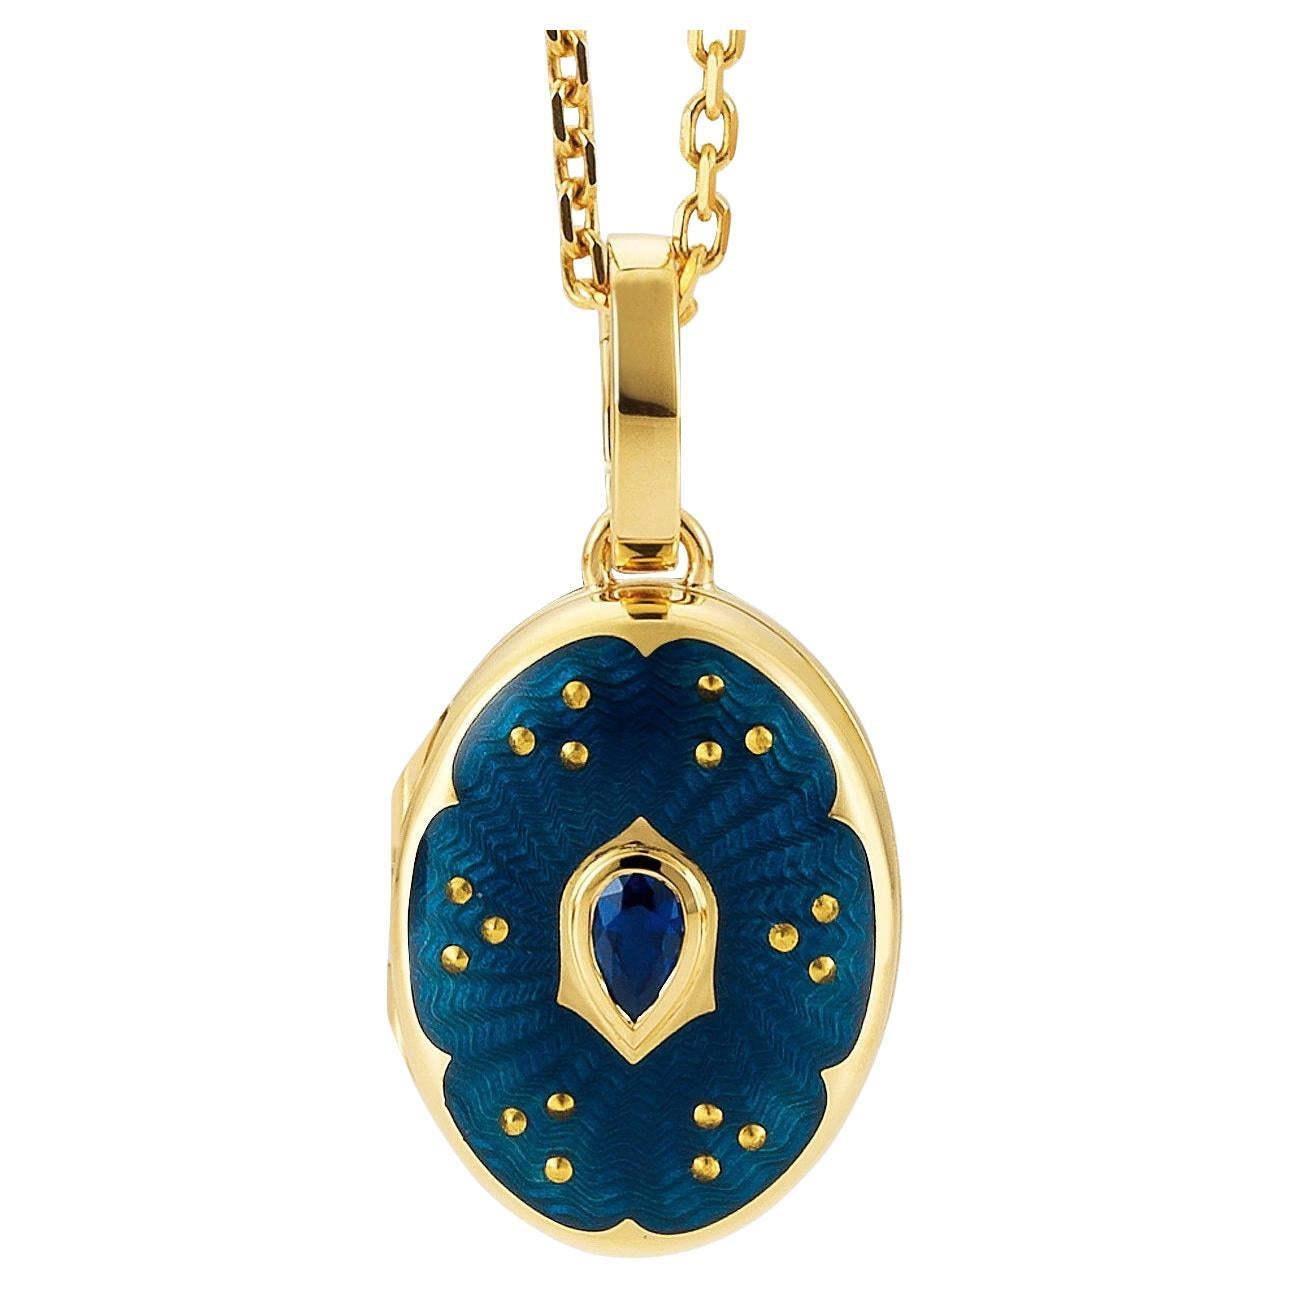  Oval Locket Pendant Necklace - 18k Yellow Gold - Blue Enamel - 1 Sapphire For Sale